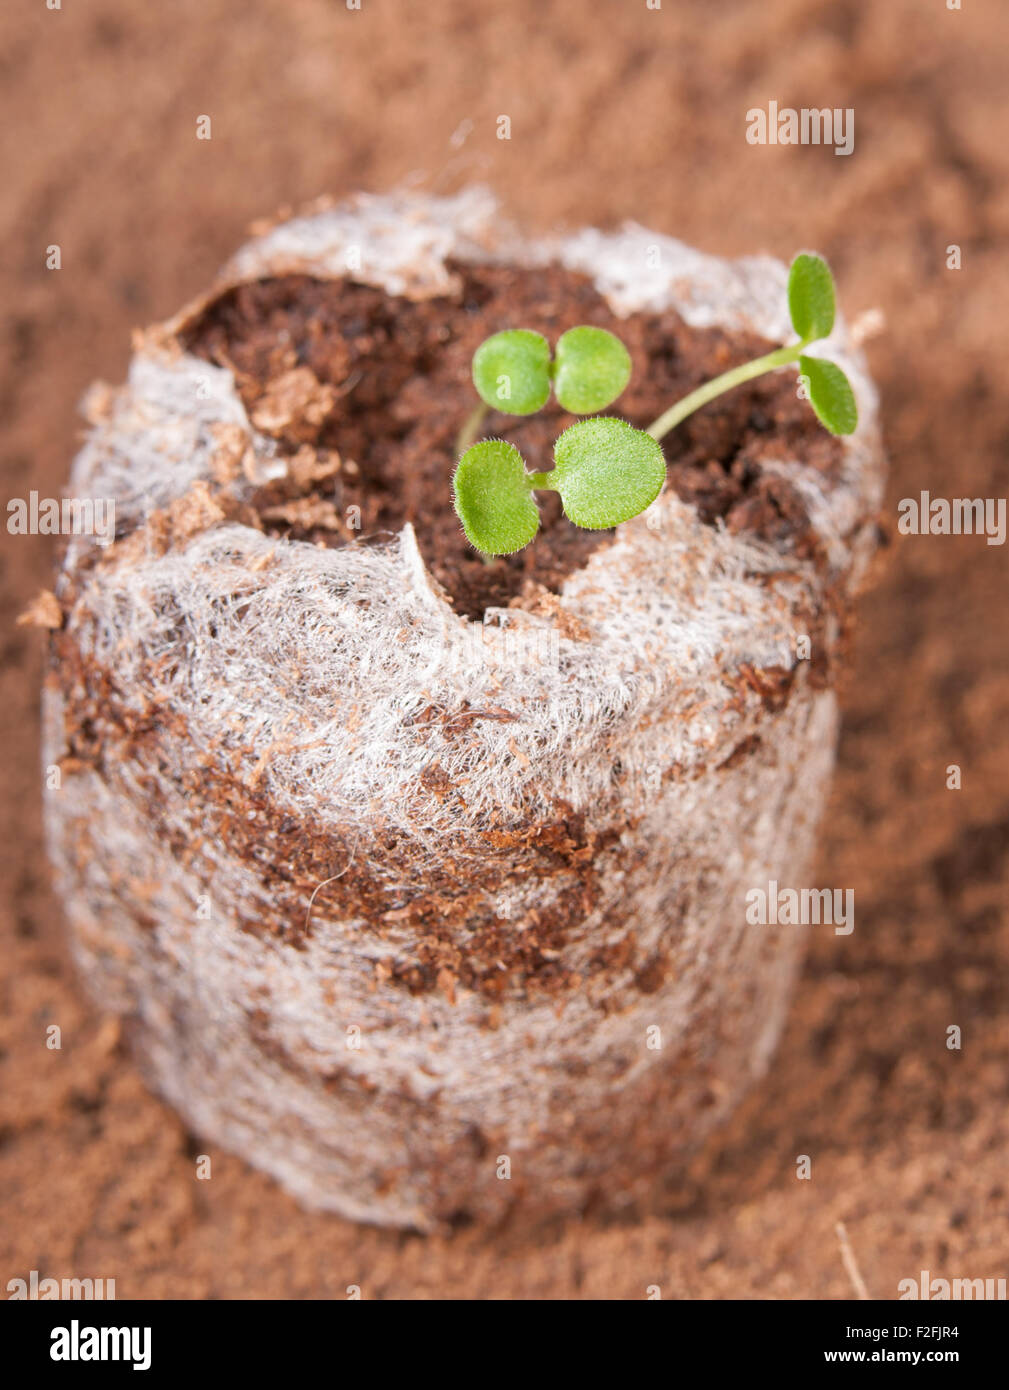 Tiny seedlings growing in peat moss pellet Stock Photo